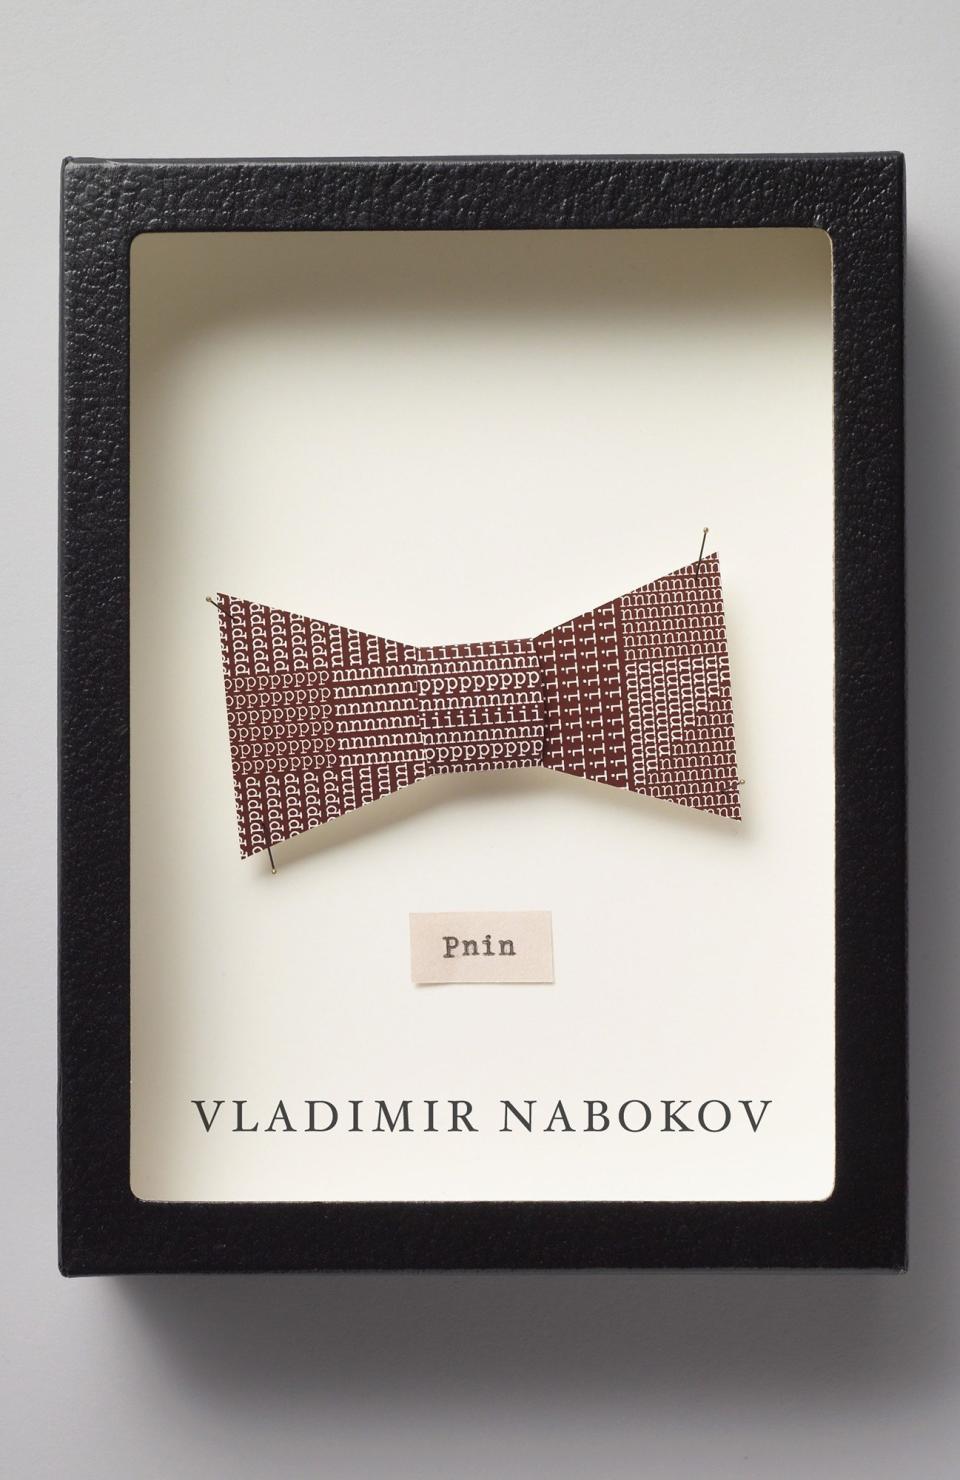 Pnin (Vintage) 
By Vladimir Nabokov